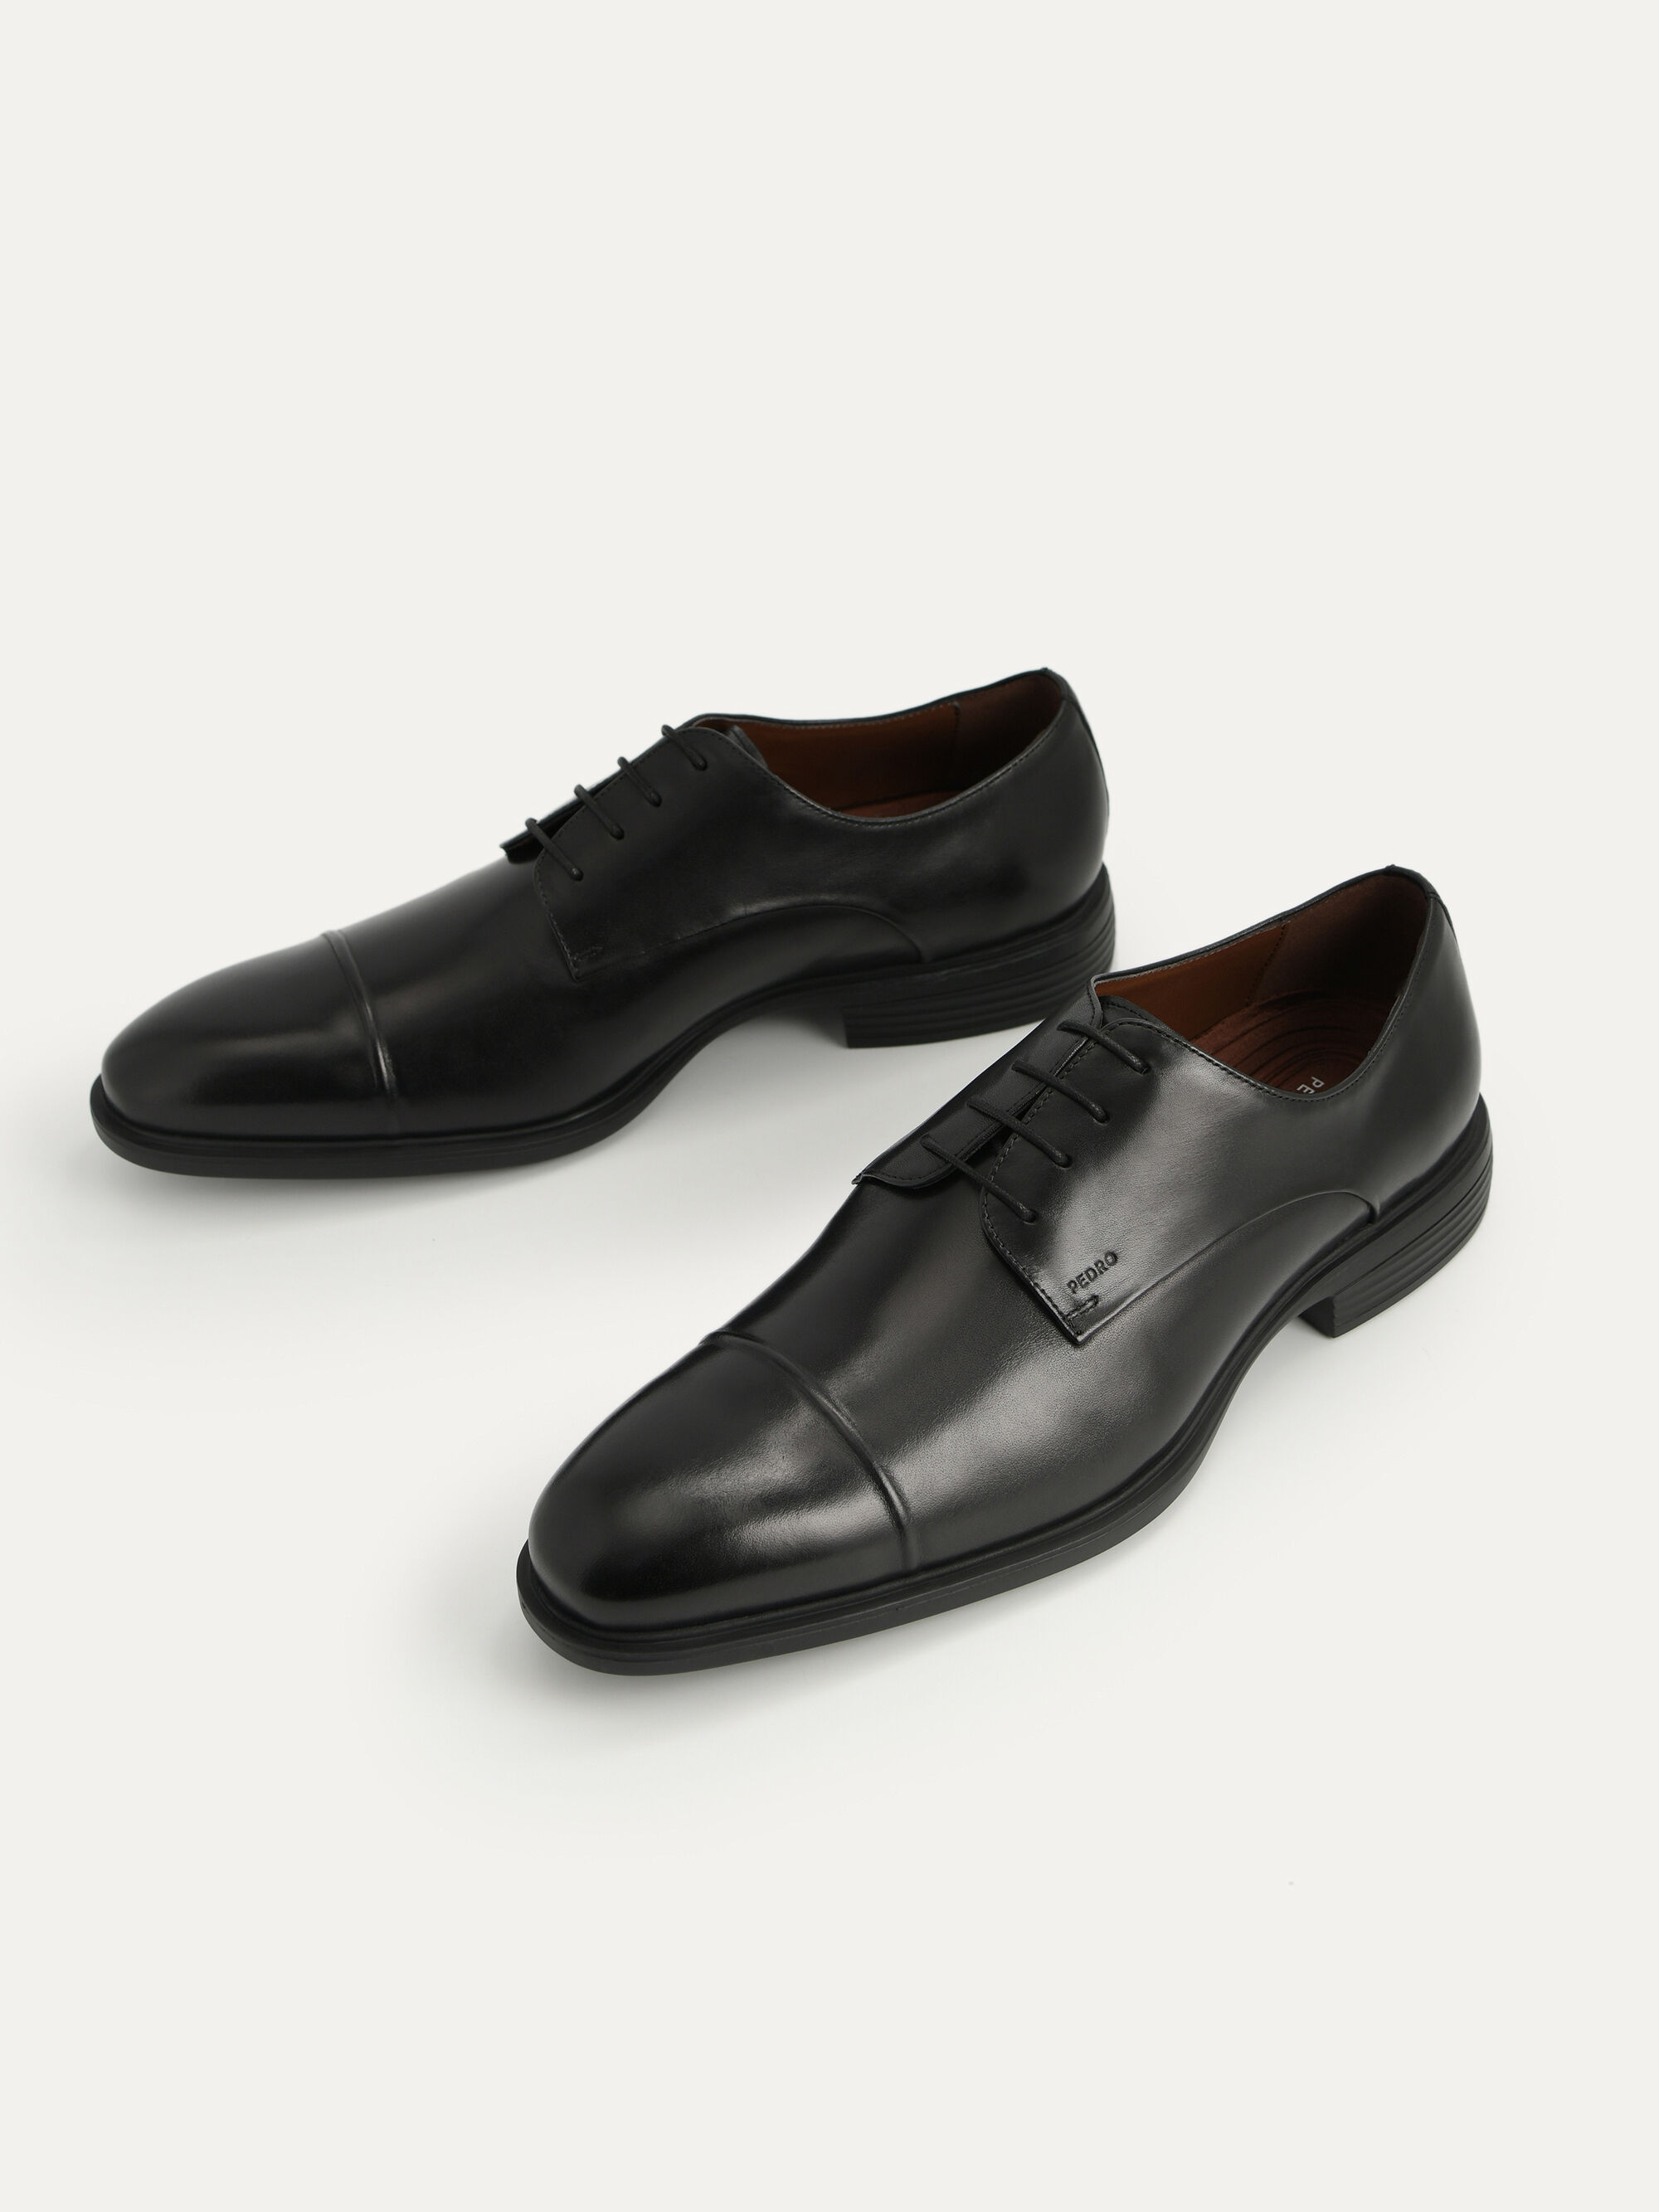 Black Altitude Leather Toe Derby Shoes - PEDRO SG